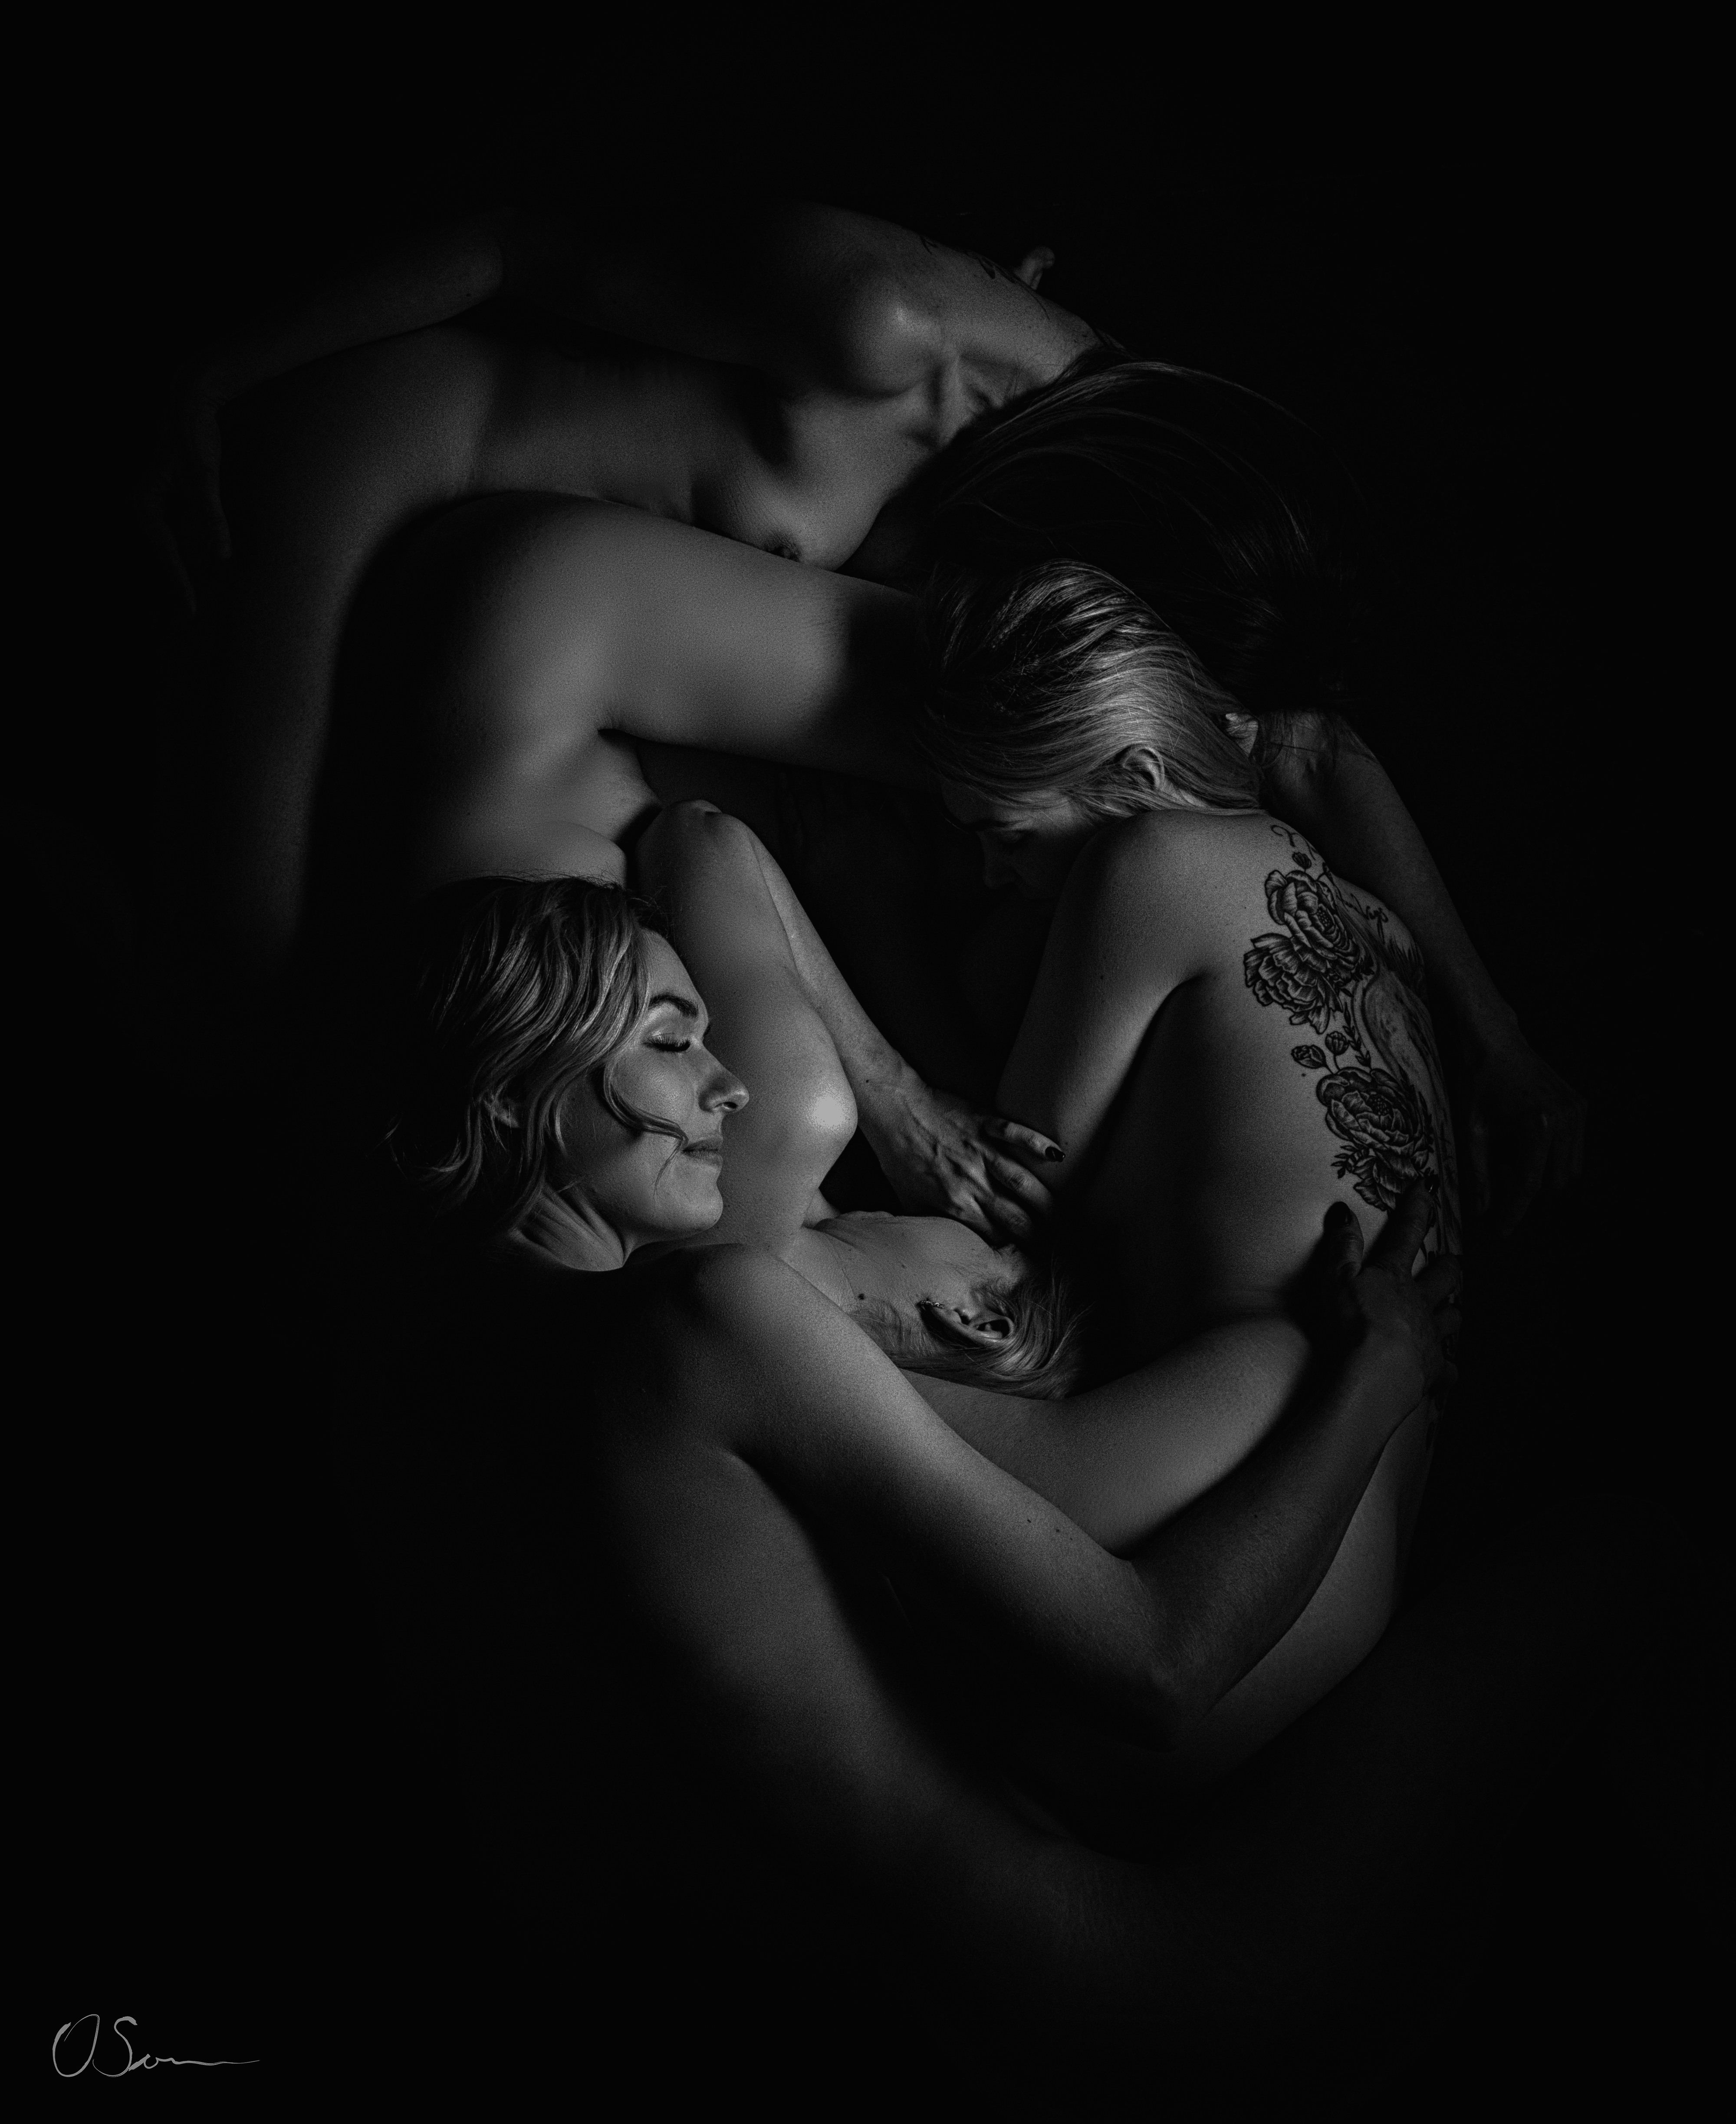 a hug can cure the a world | nude art photography